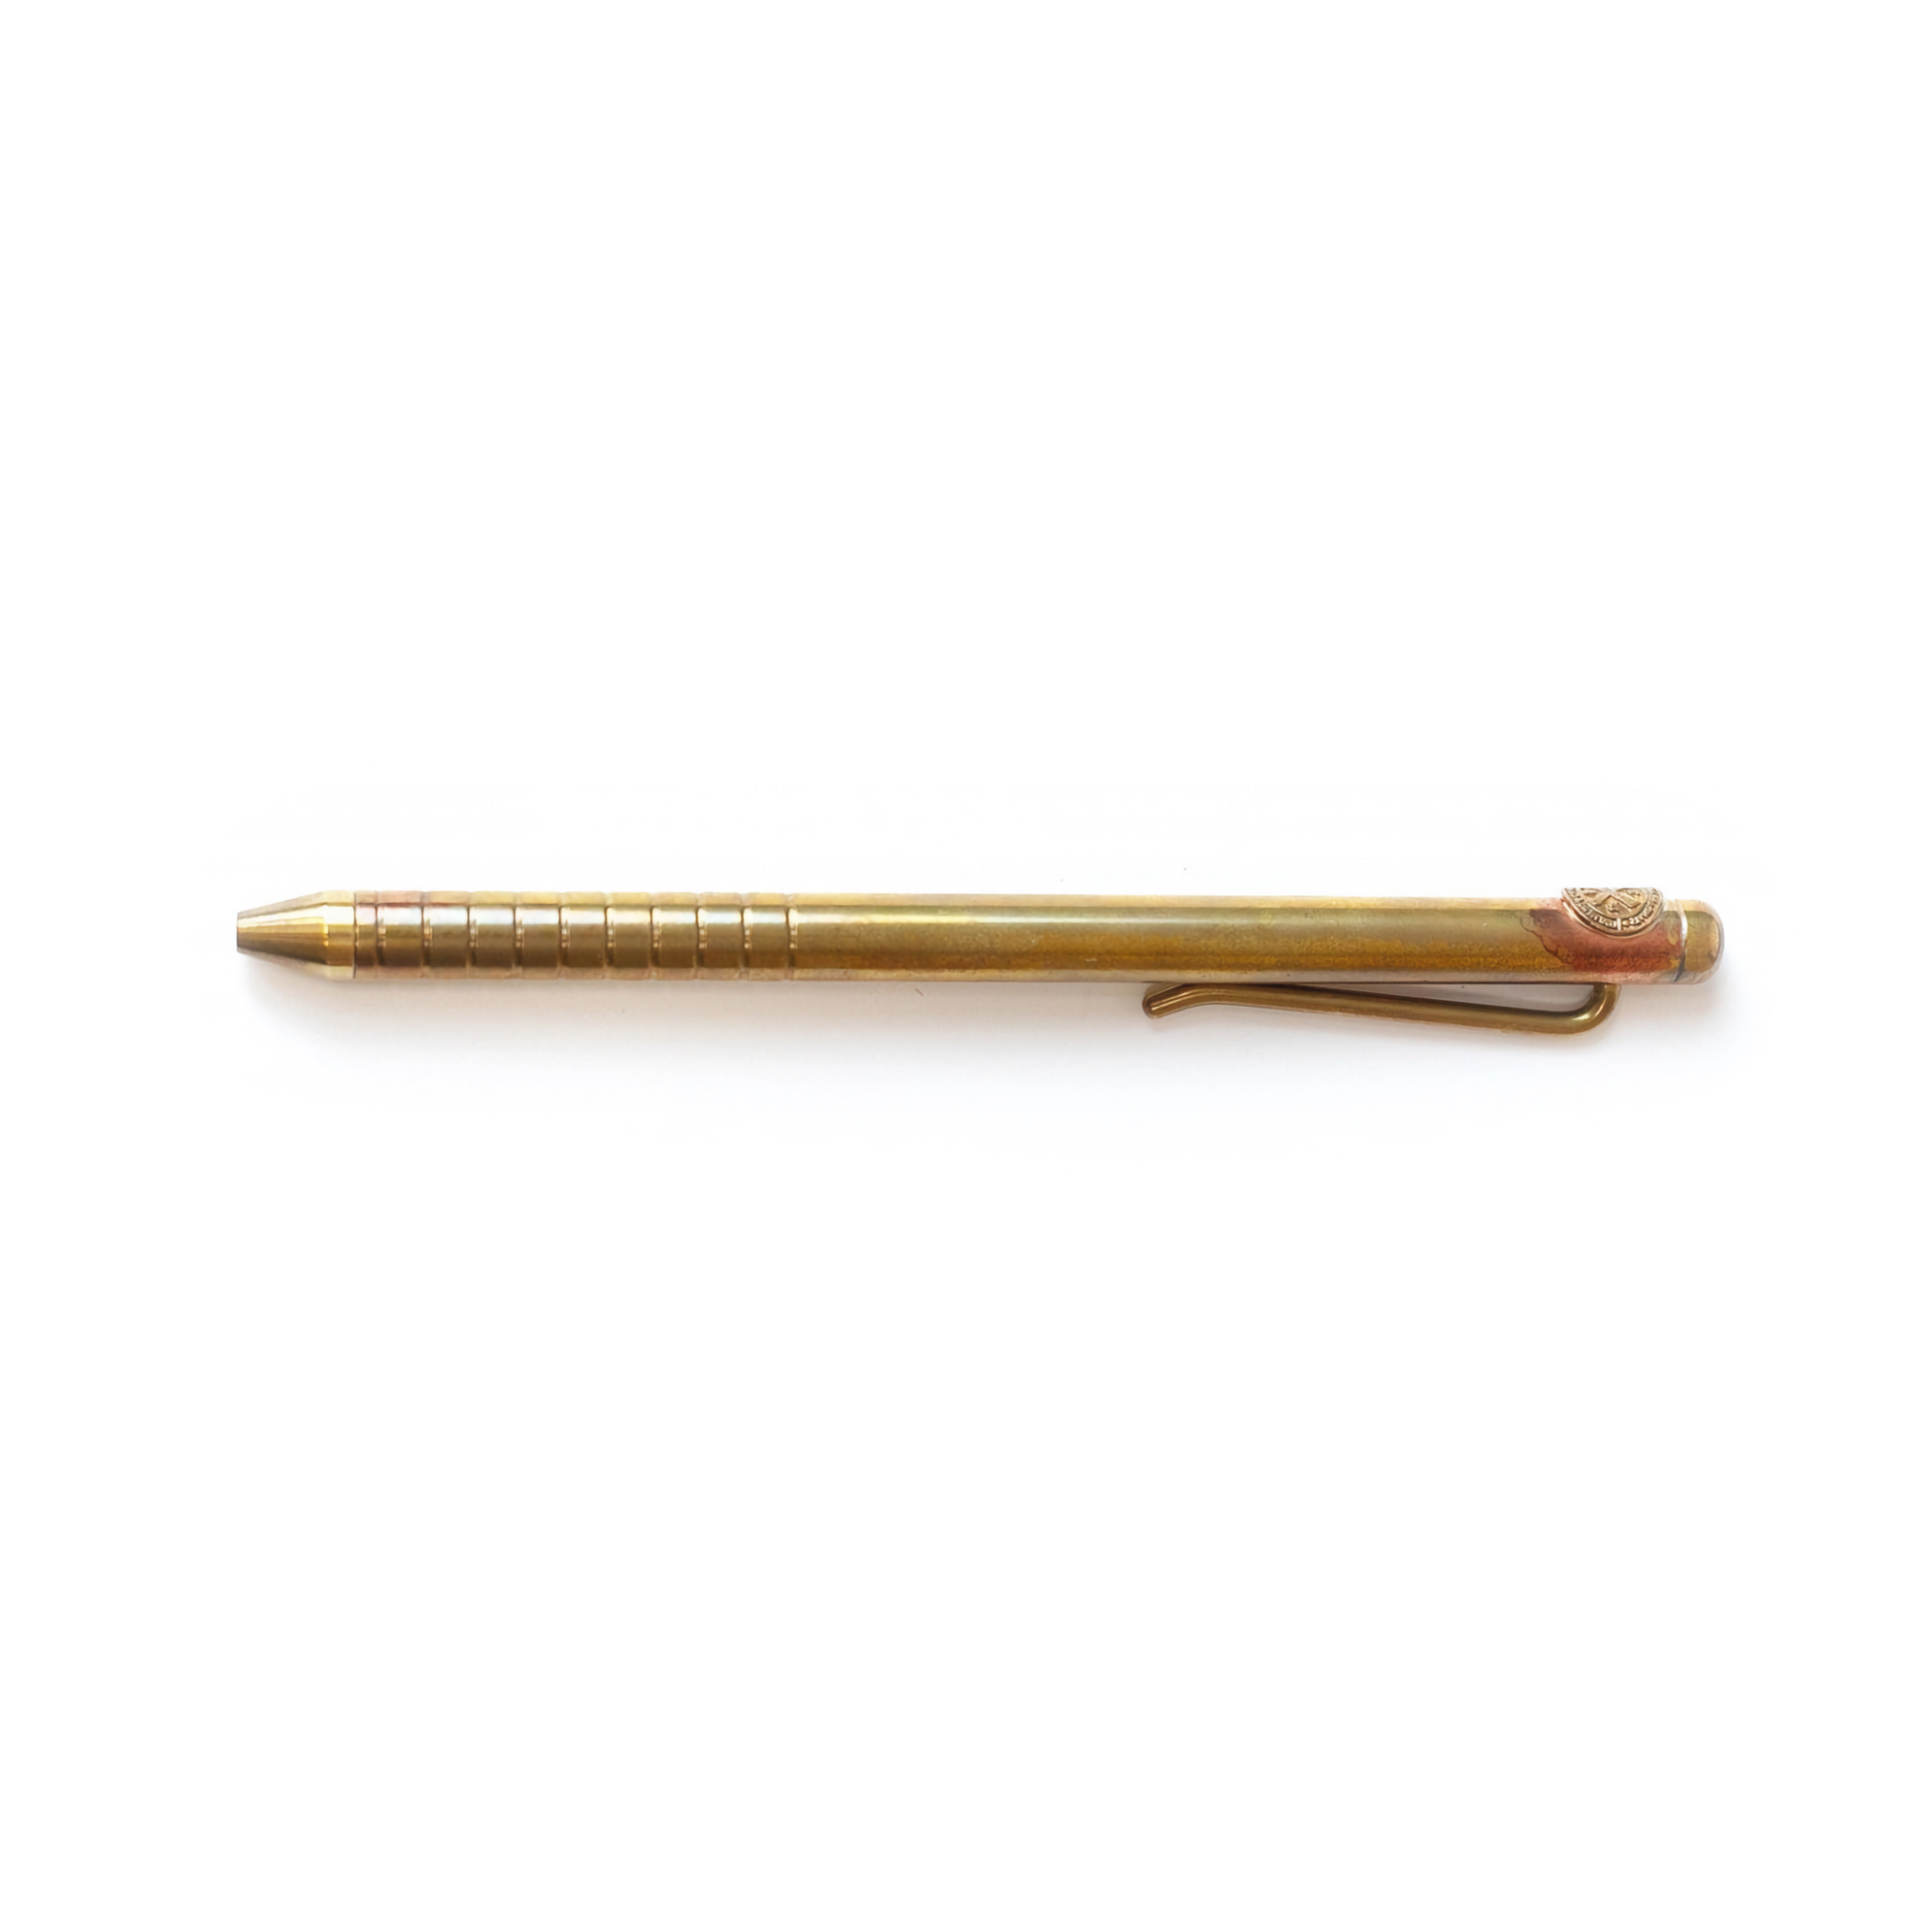 The Superior Labor Brass Ballpoint Pen